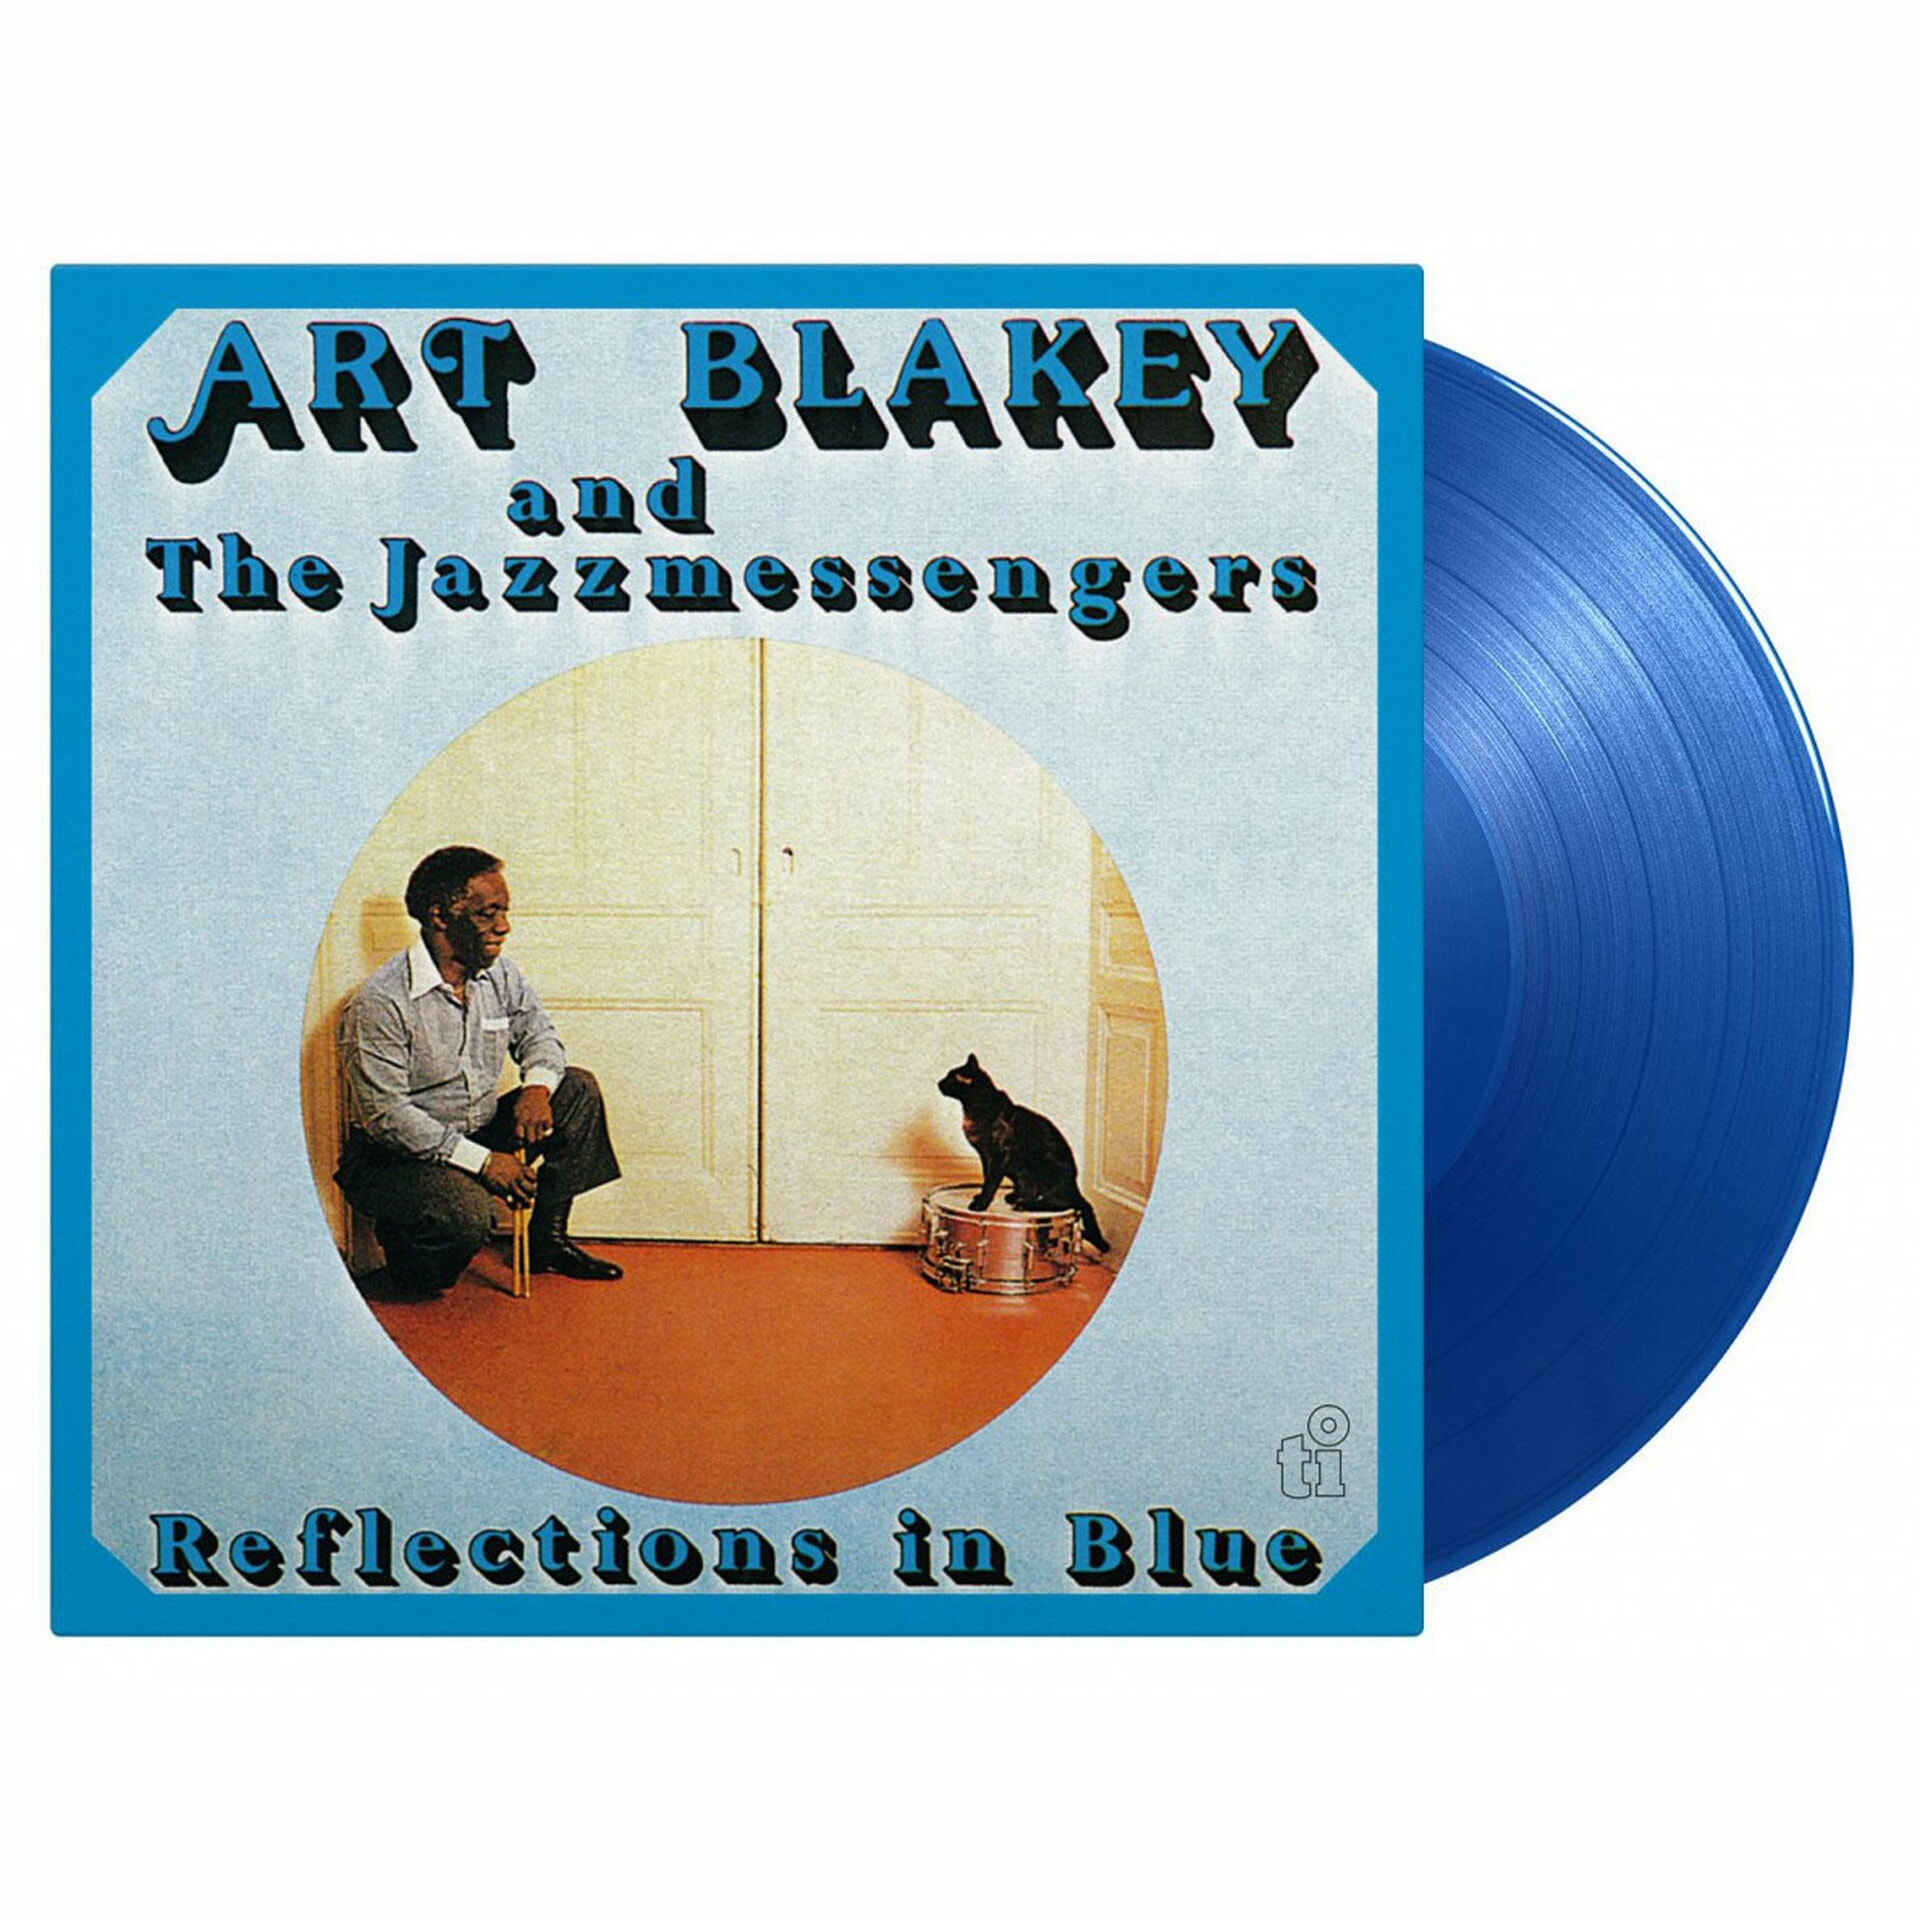 Art Blakey & The Jazzmessengers (아트 블래키 앤 재즈 메신저스) - Reflections In Blue [반투명 블루 컬러 LP]